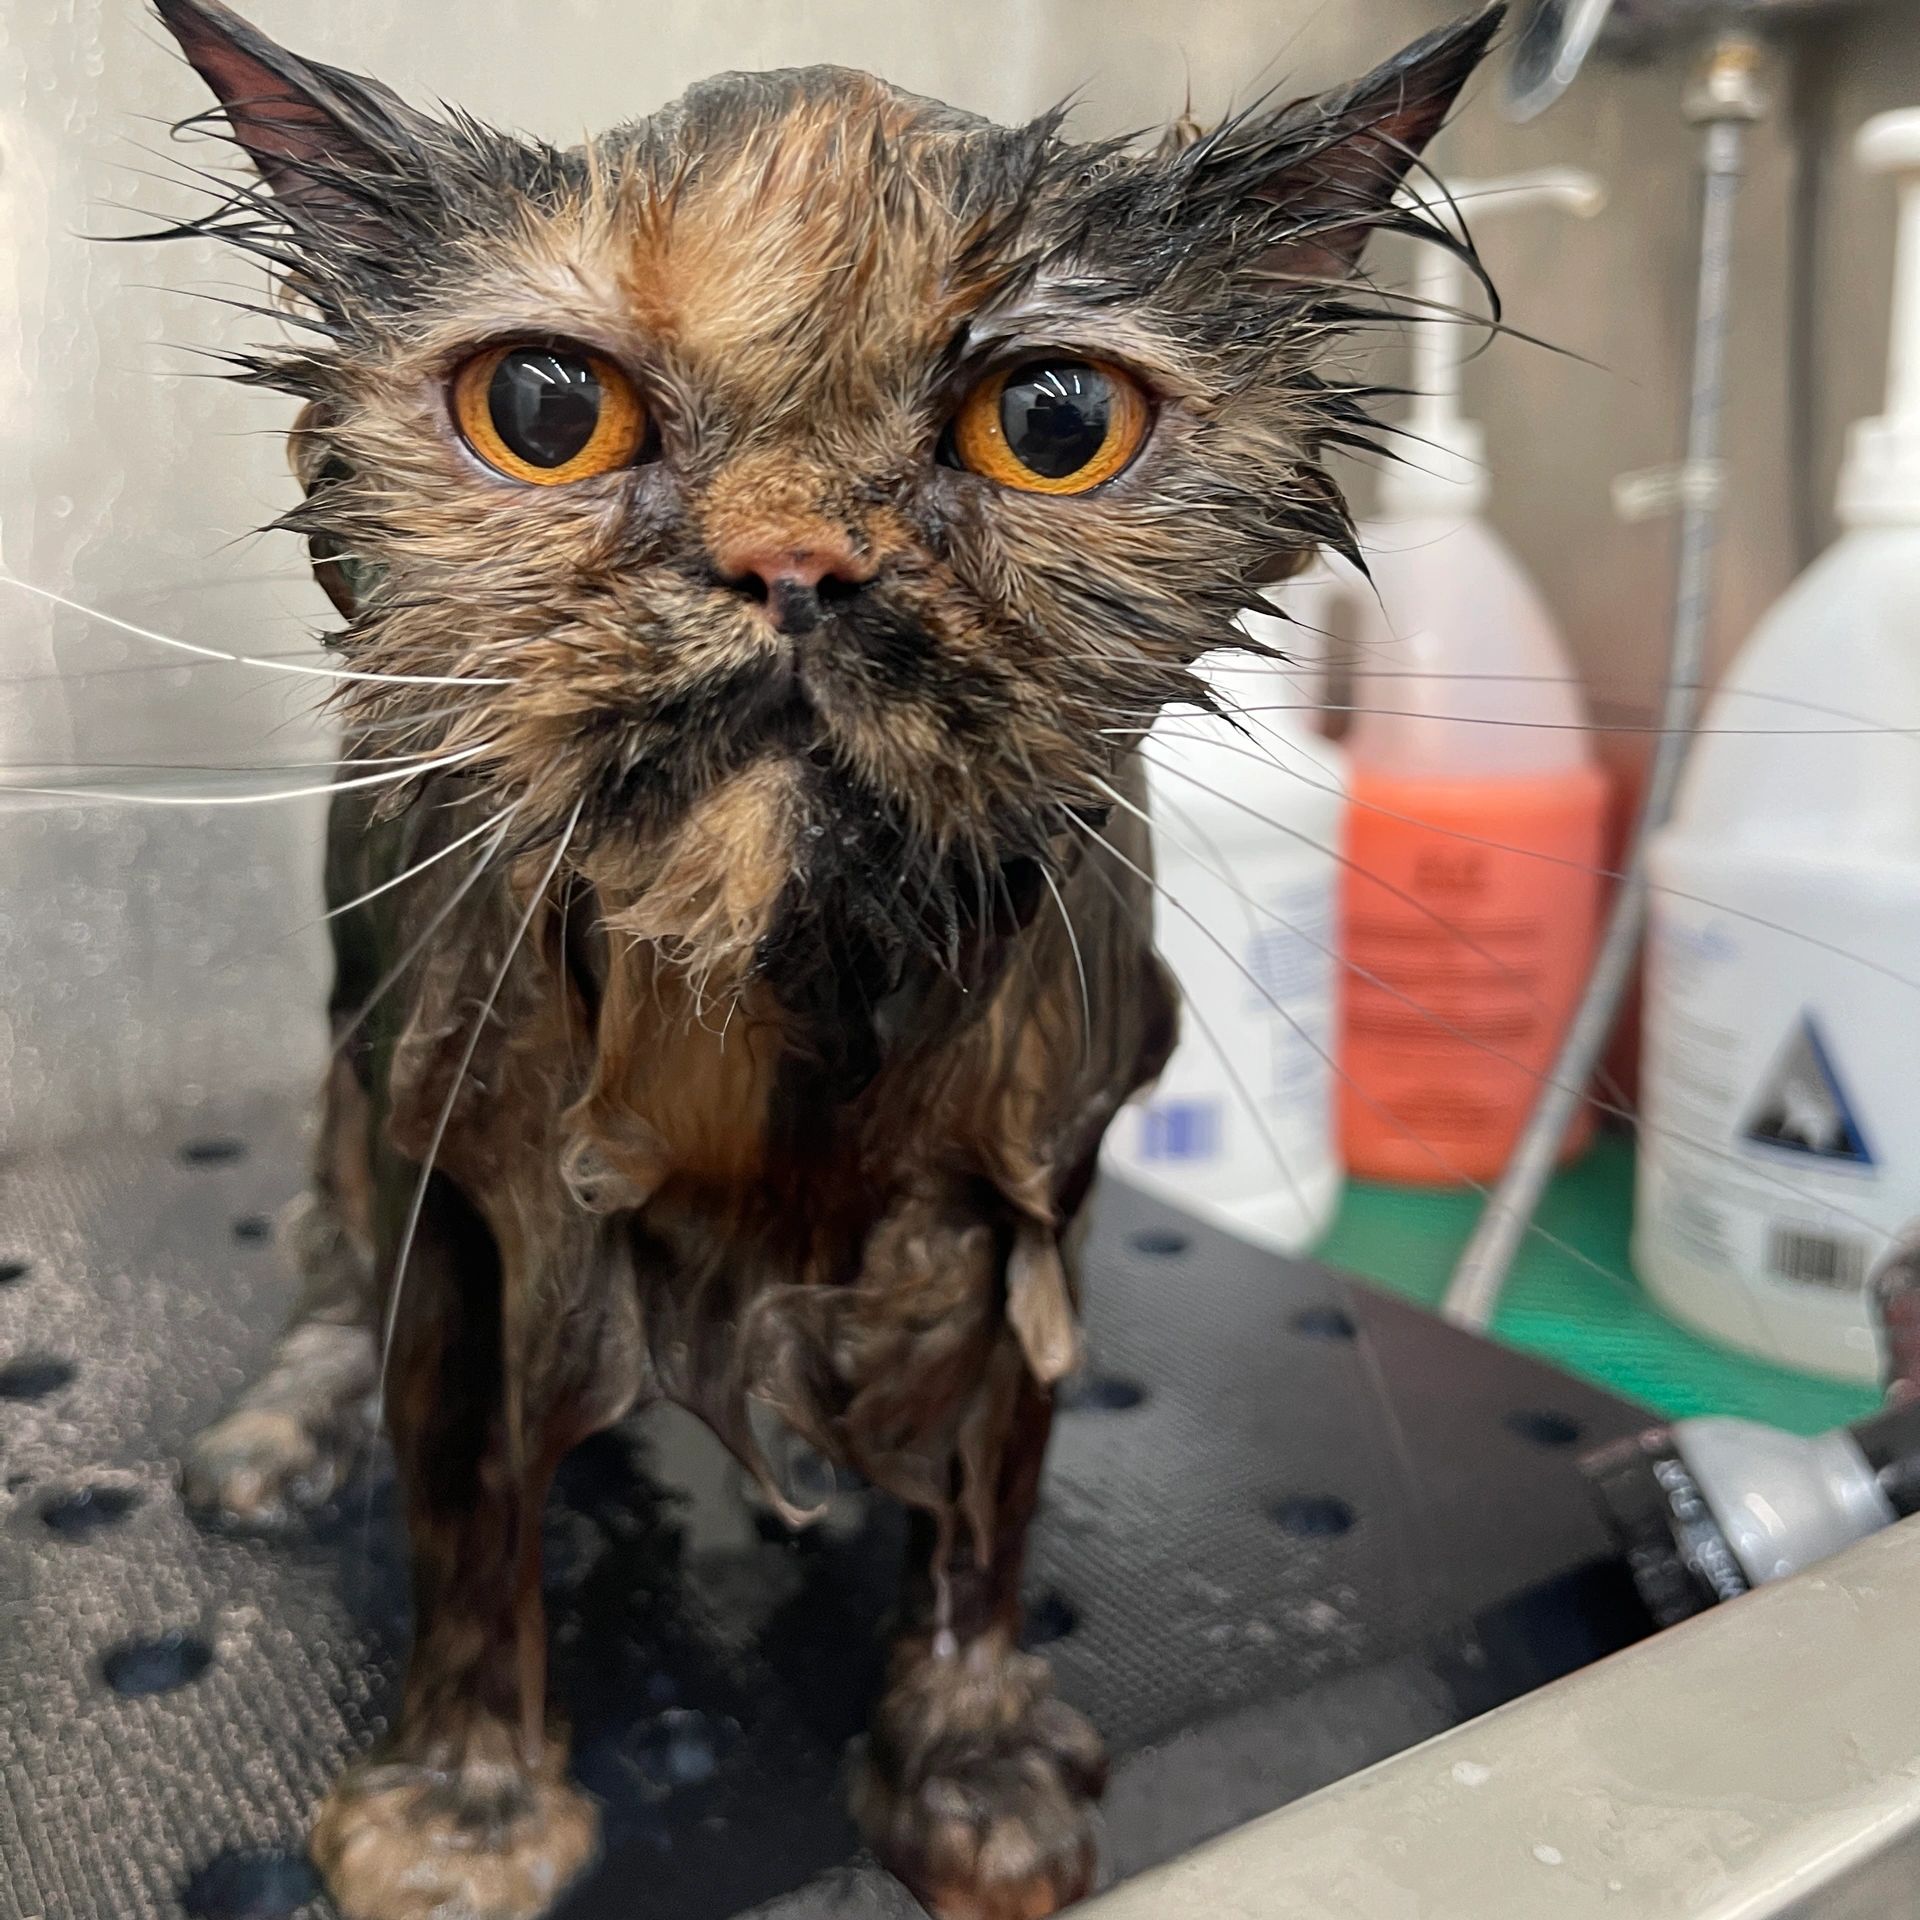 cat in bath
bathing a cat